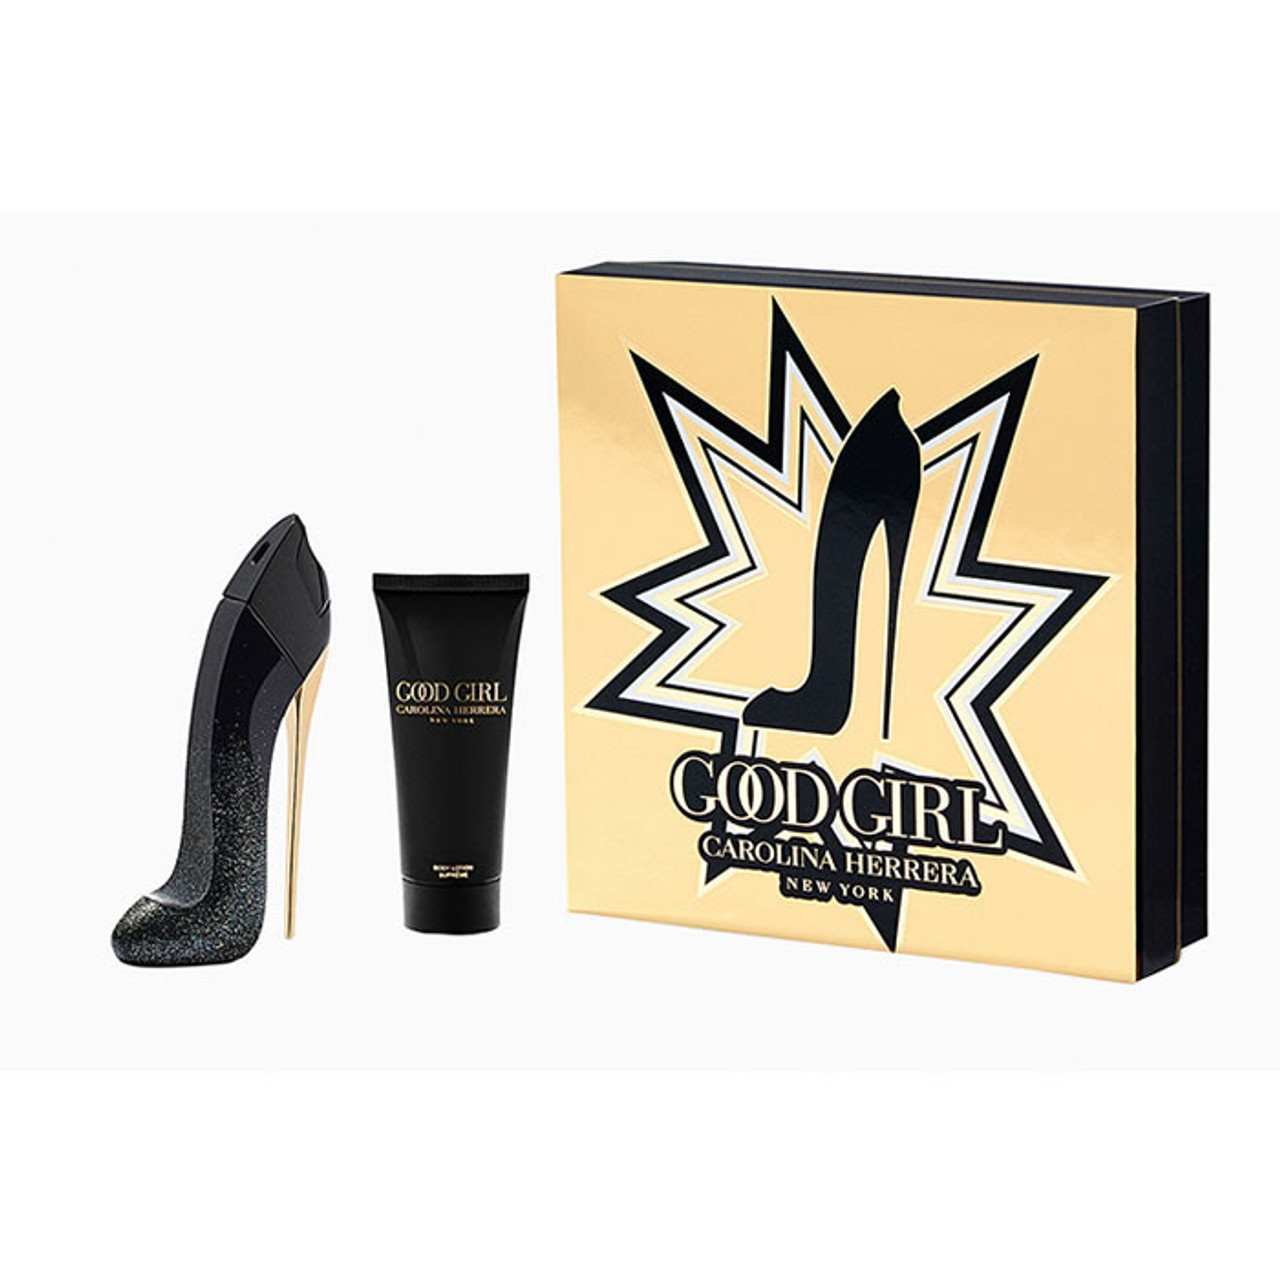 Good Girl by Carolina Herrera for Women 2 Piece Set Includes: 2.7 oz Eau de  Parfum Spray + 3.4 oz Body Lotion